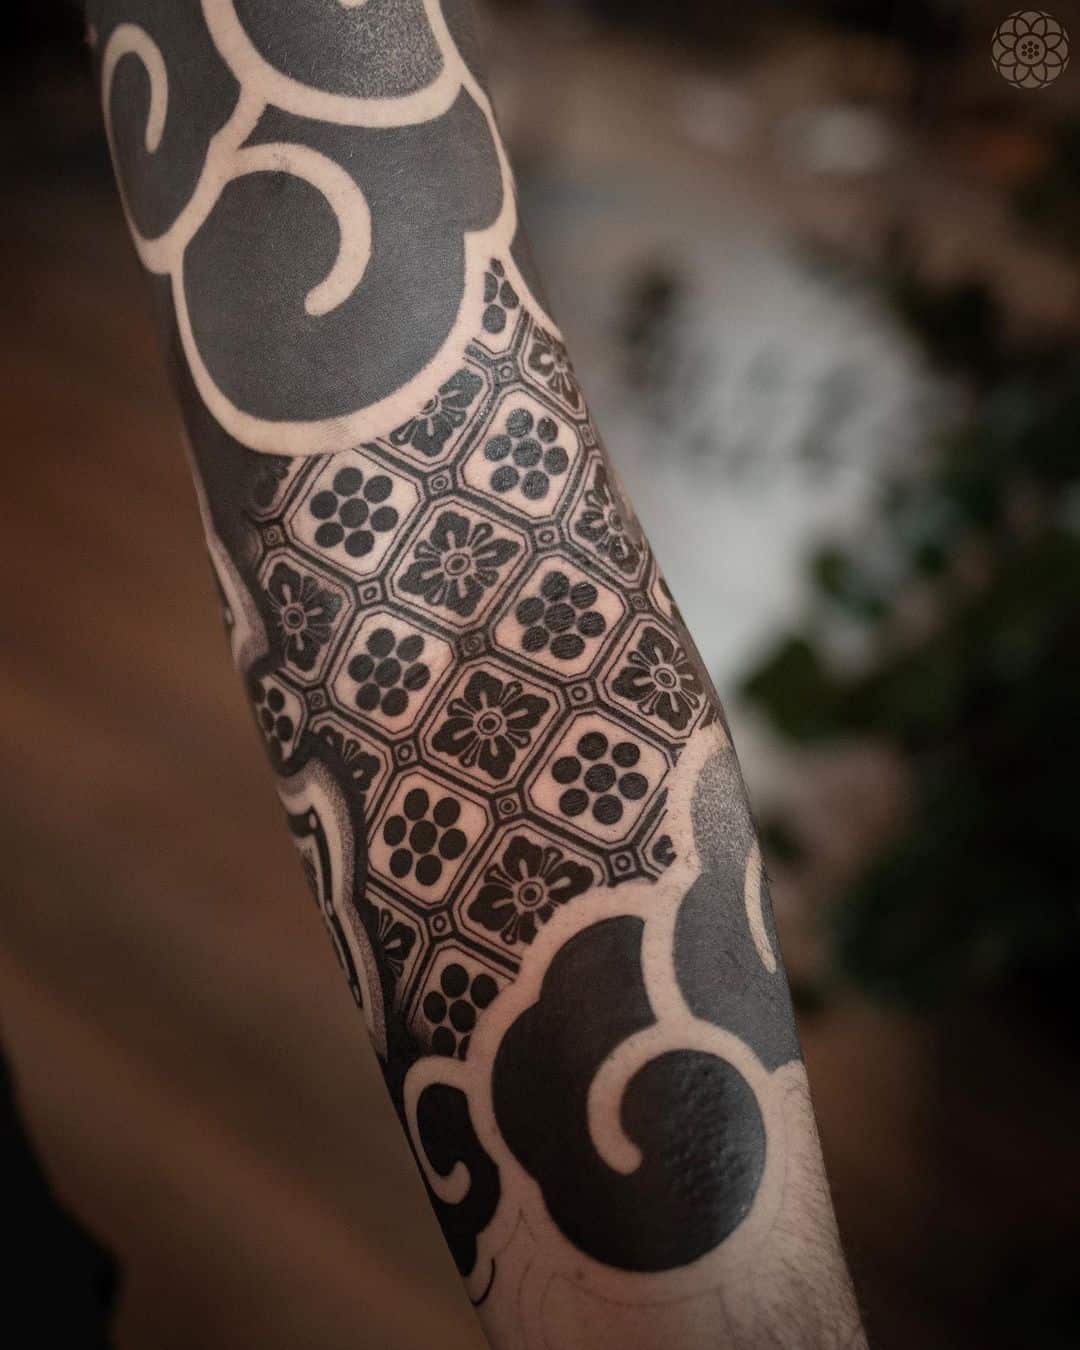 Dotwork arm tattoo by undulmood